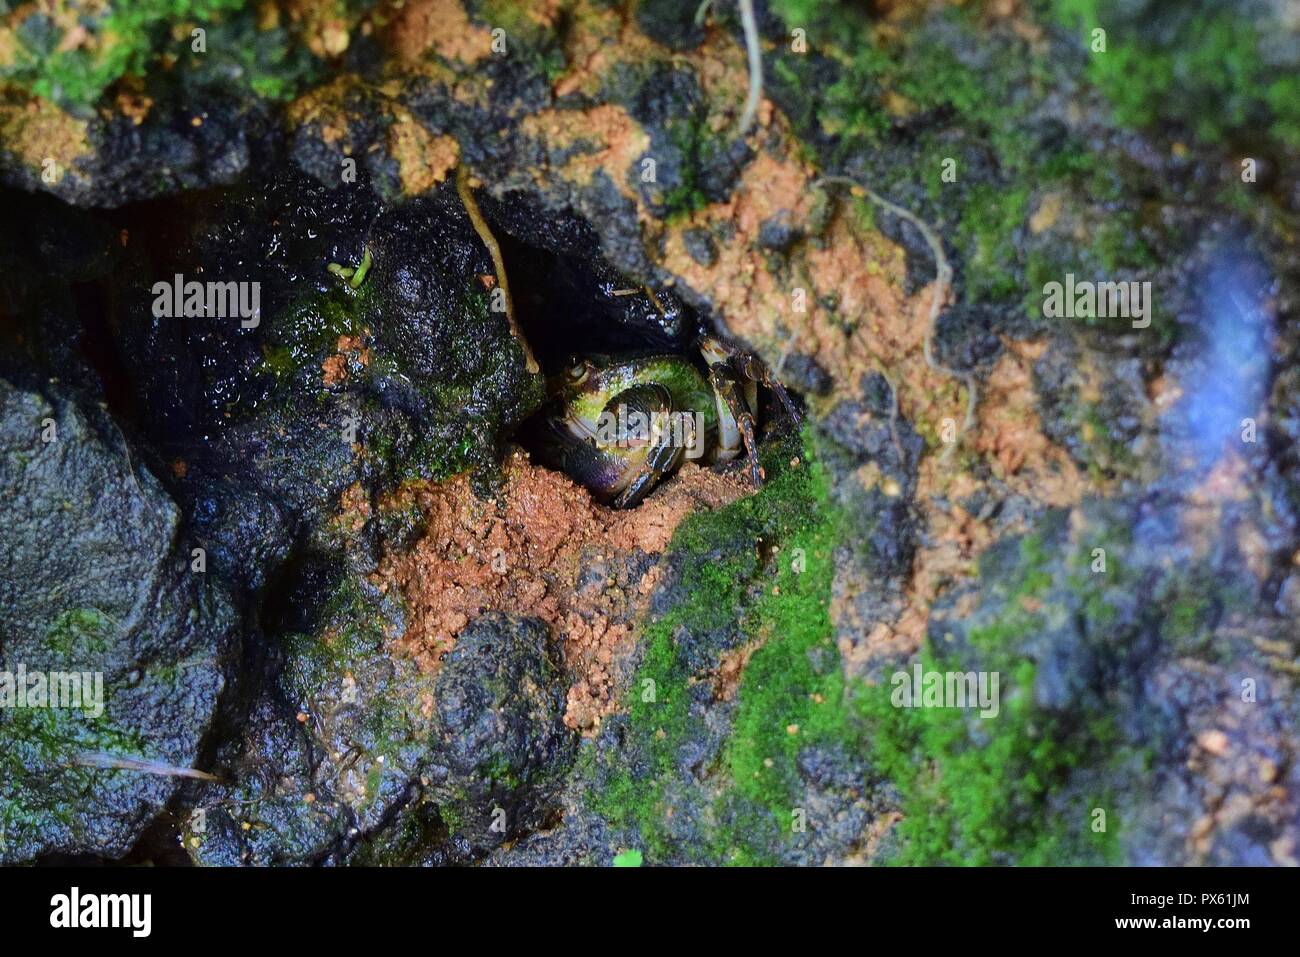 Maltese freshwater crab, Potamon fluviatile, muddy burrow nest, claws for defense against intruders. threatened rare crab found on the Maltese Islands Stock Photo